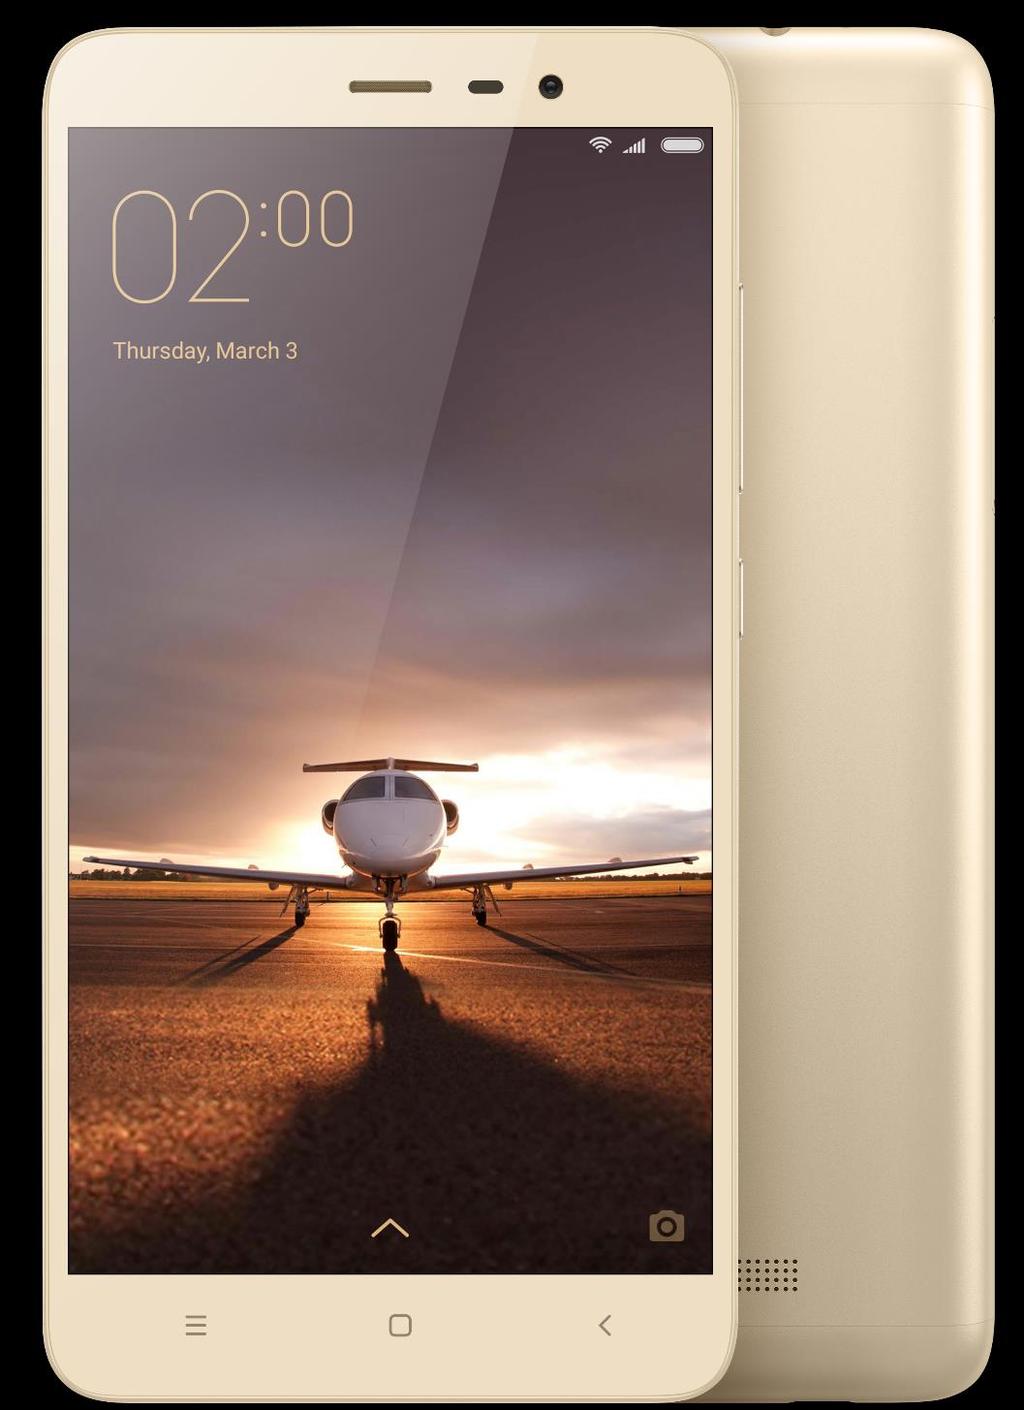 PRODUKTY XIAOMI W OFERCIE ABC DATA Xiaomi Redmi Note 3; - Technologia: Snapdragon 650, 16GB - Ekran: 5.